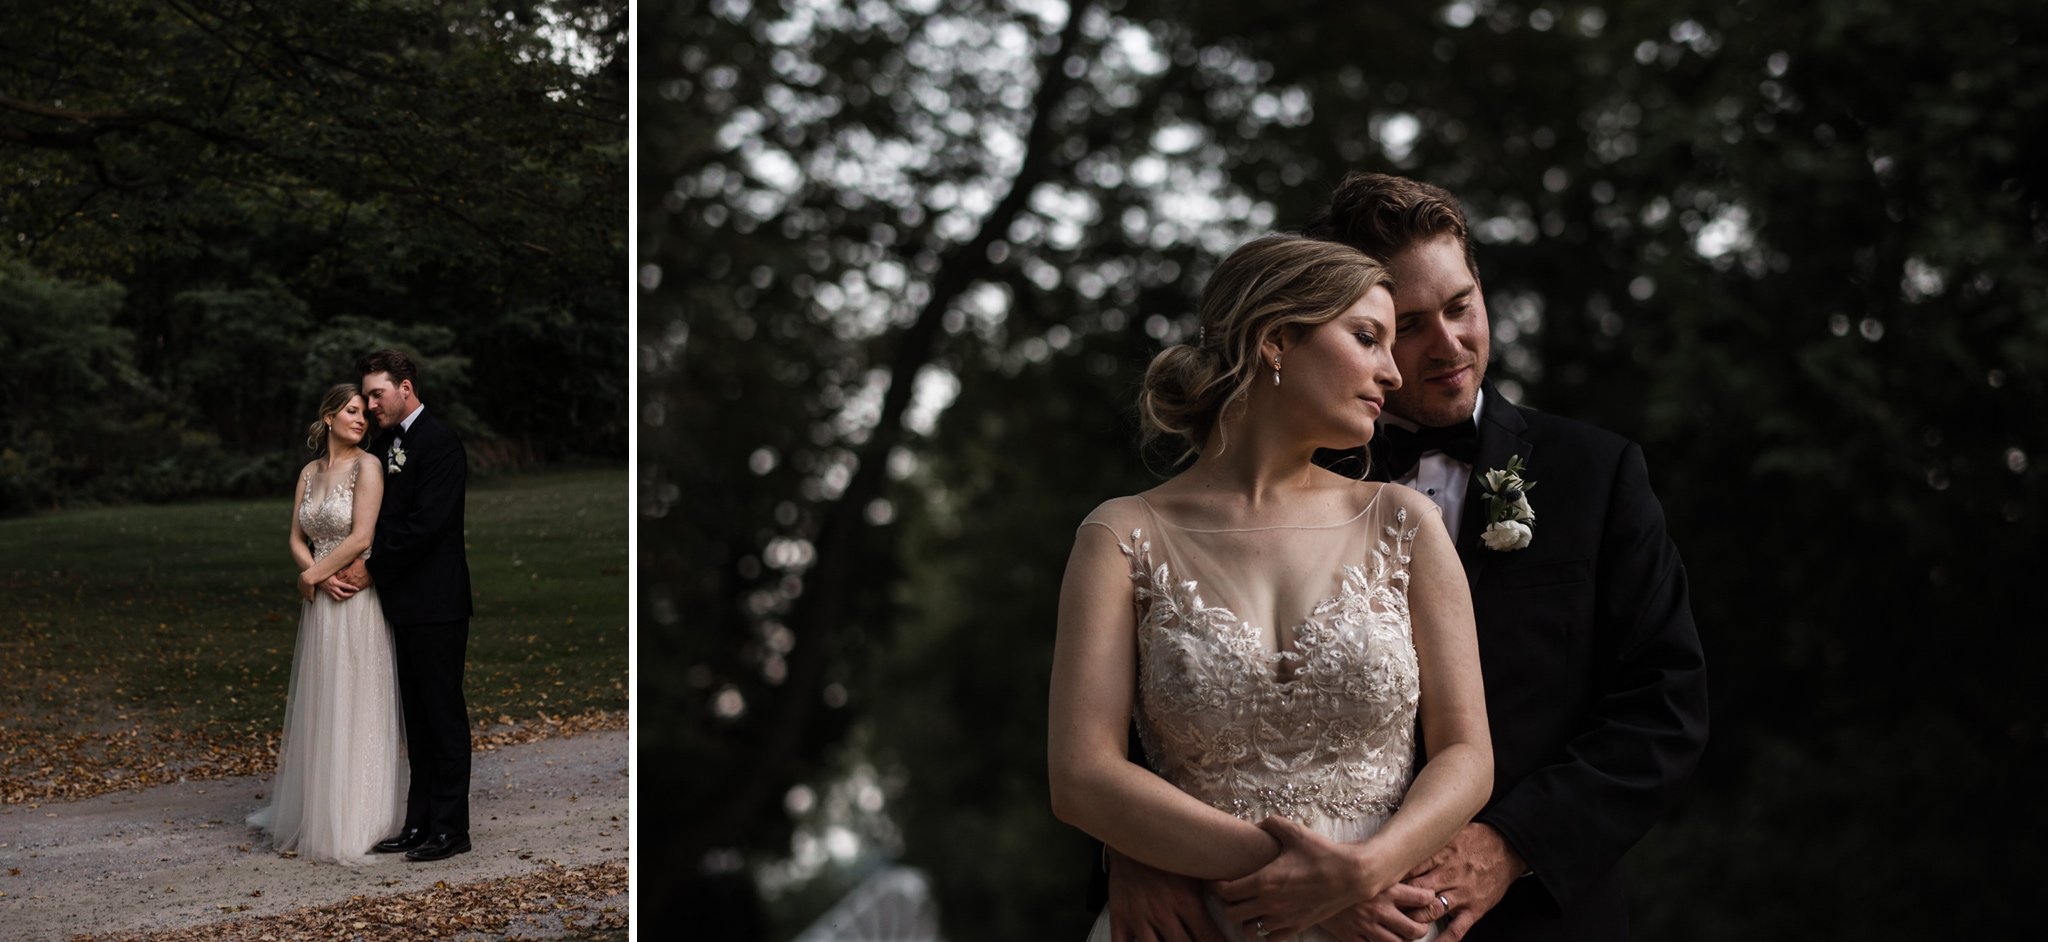 228-elegant-wedding-dress-couple-portraits-penryn-park-toronto-photographer.jpg